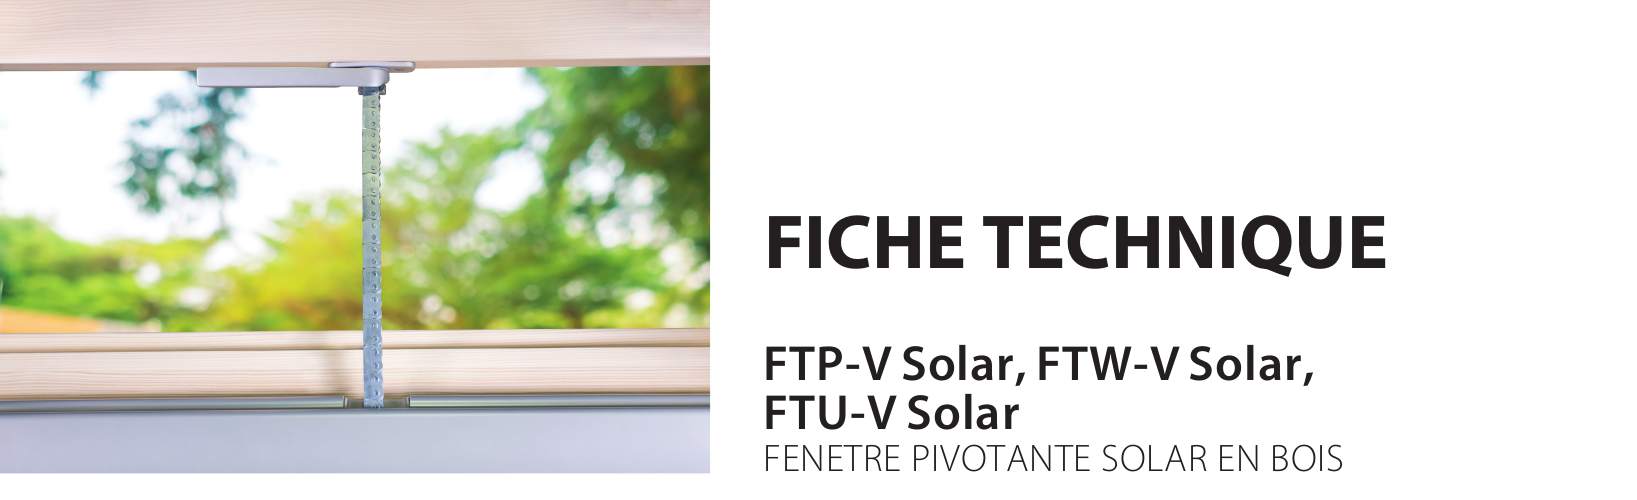 Photo FT_-V Solar